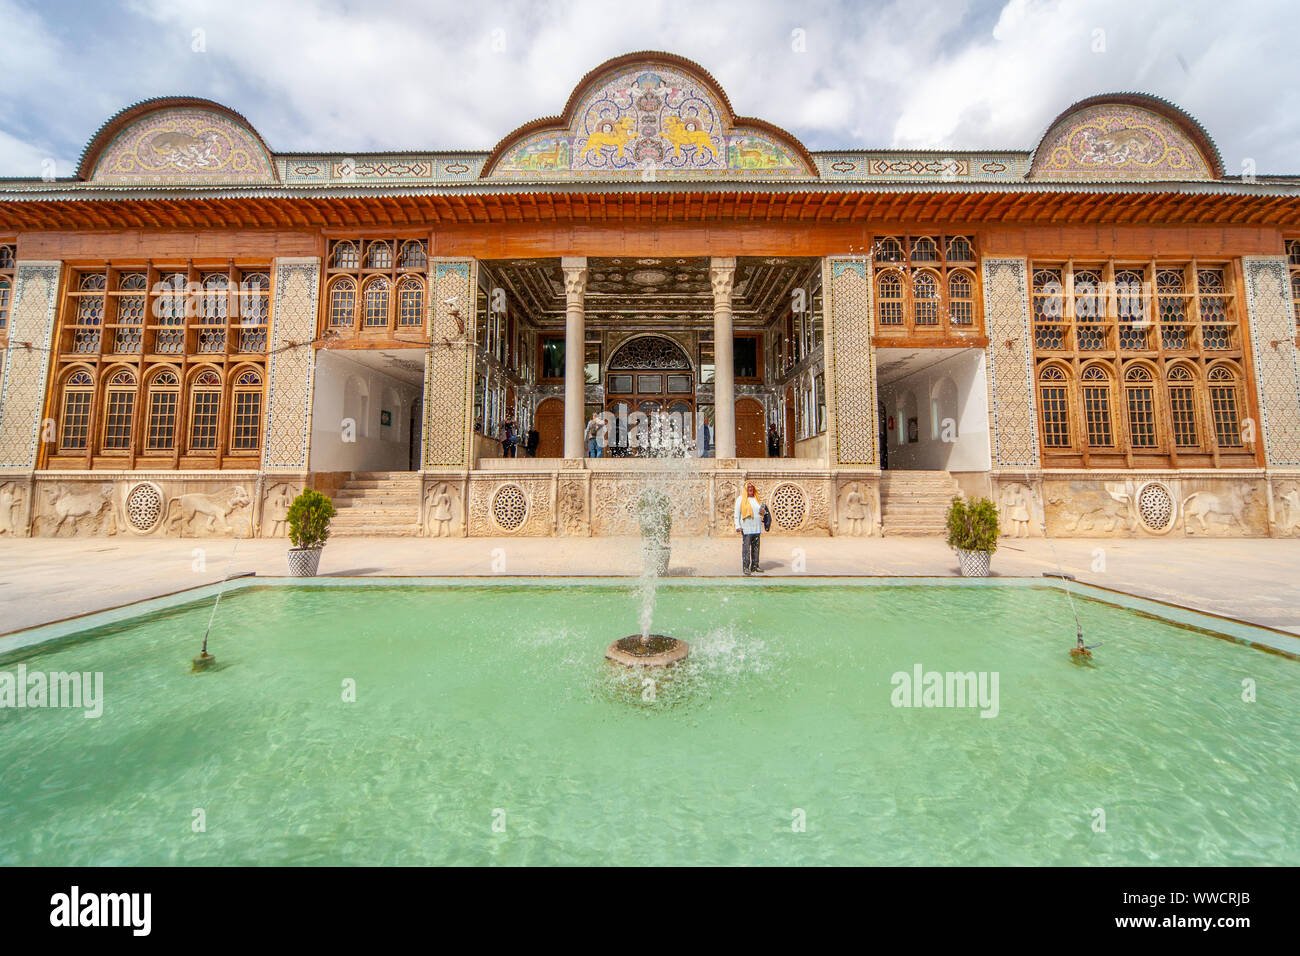 Bagh-e Narenjestan palace in Shiraz, Iran Stock Photo